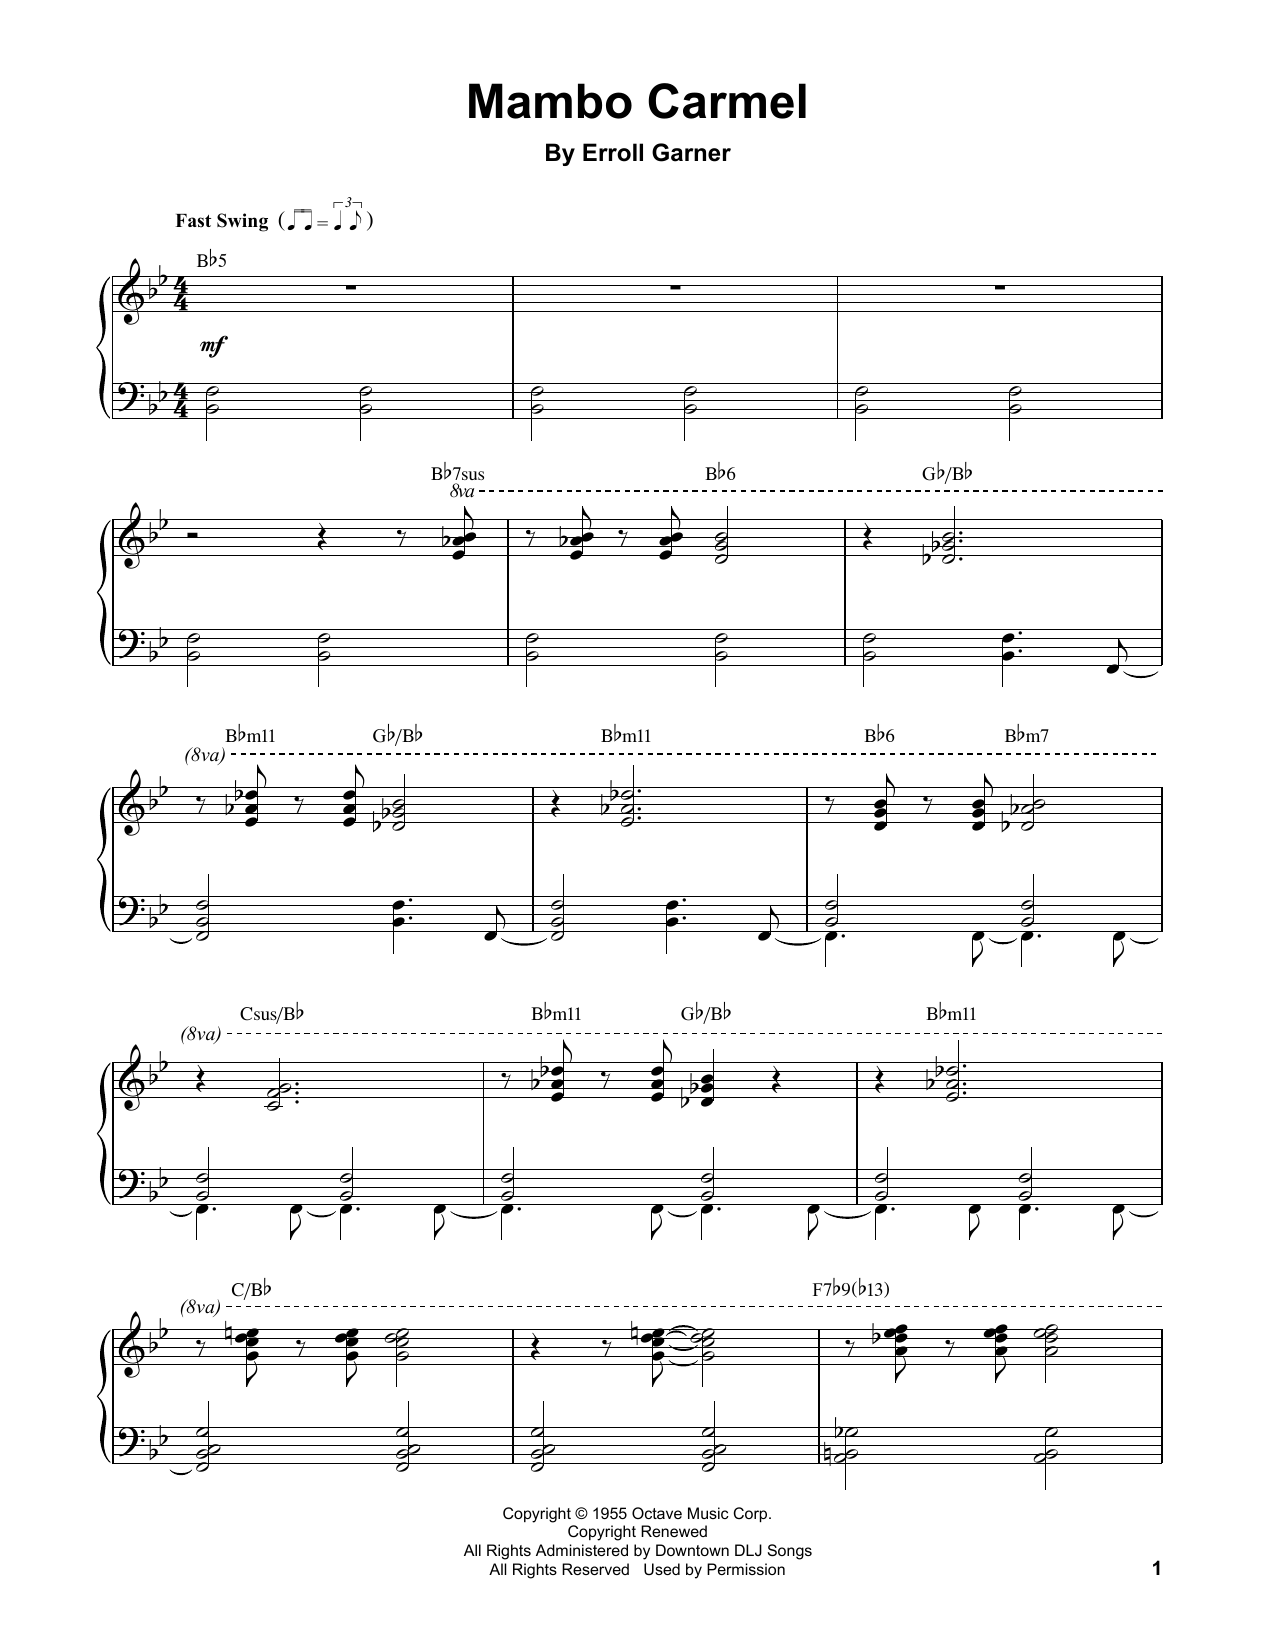 Erroll Garner Mambo Carmel Sheet Music Notes & Chords for Piano Transcription - Download or Print PDF